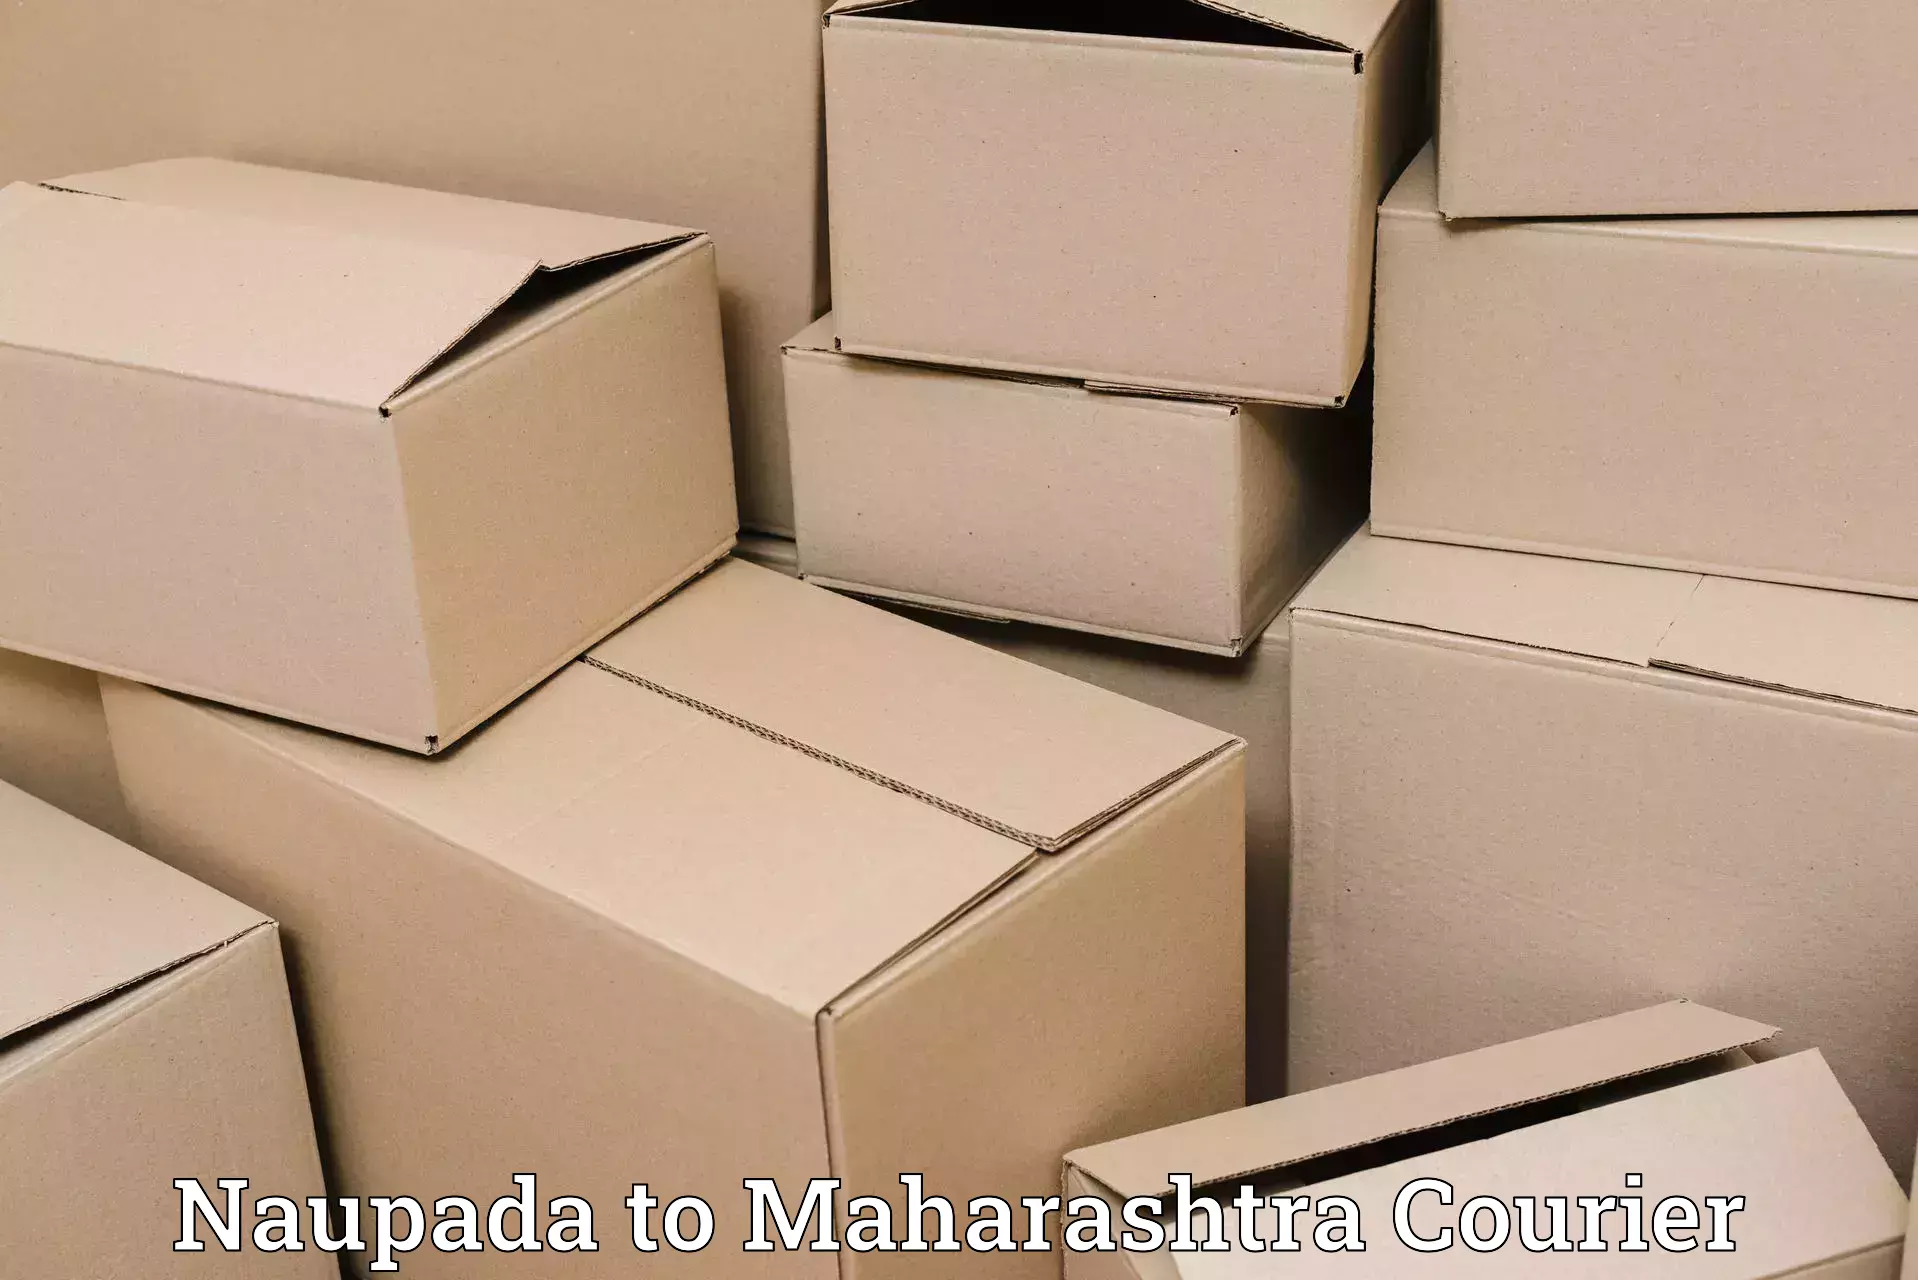 Streamlined delivery processes Naupada to Mumbai Port